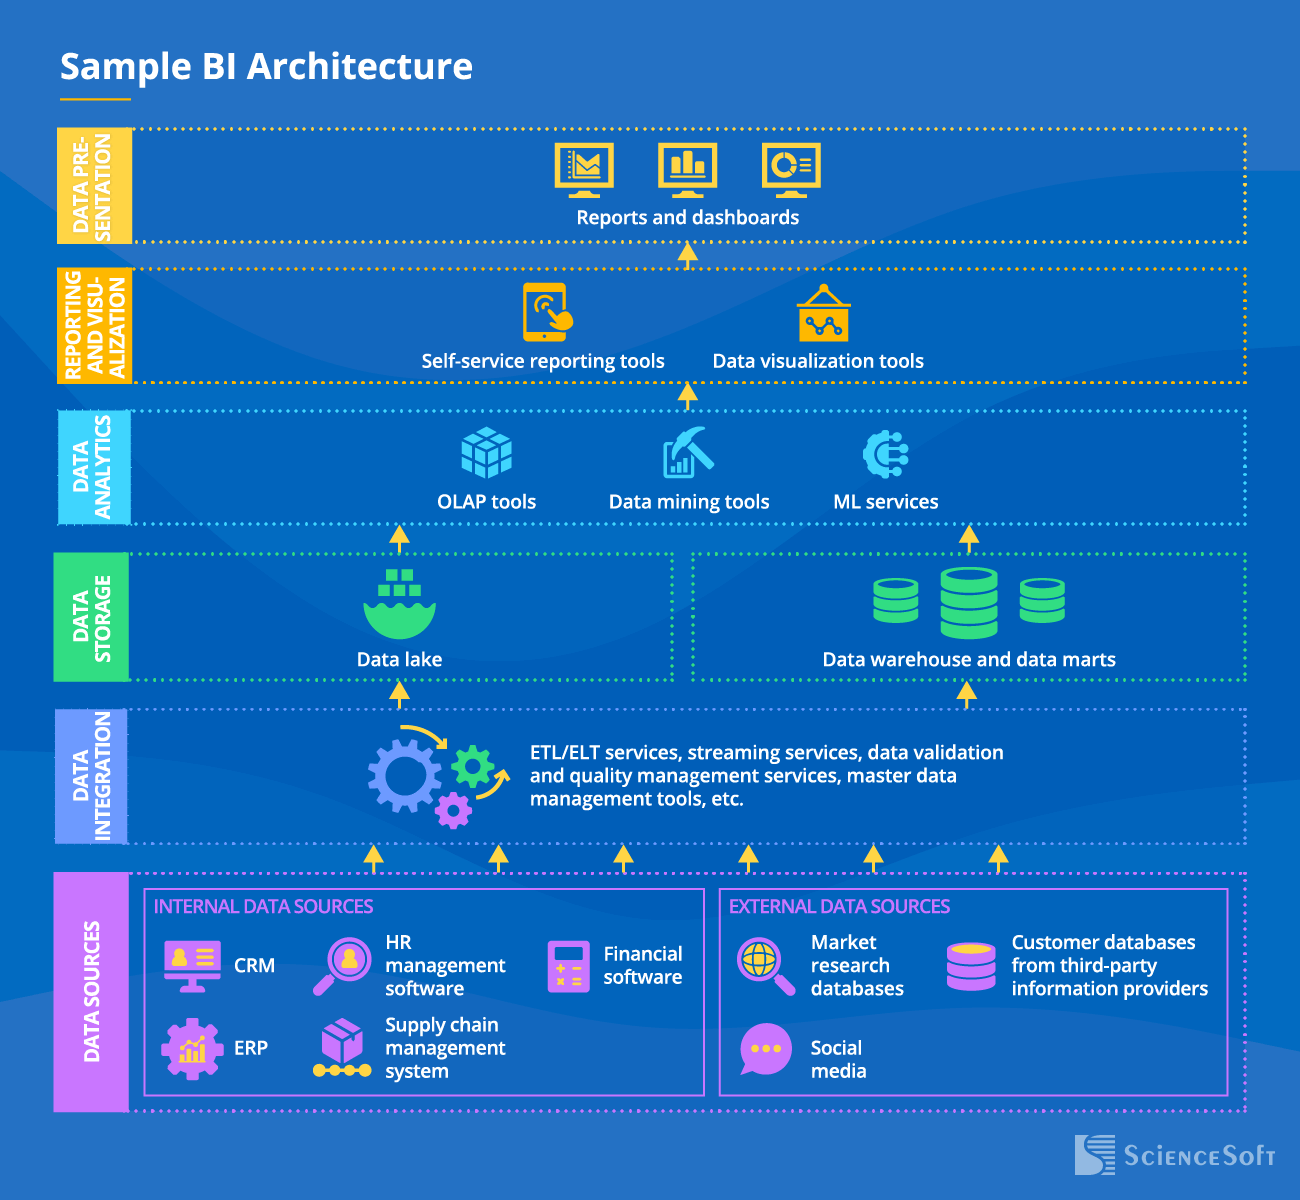 Sample BI Architecture - ScienceSoft